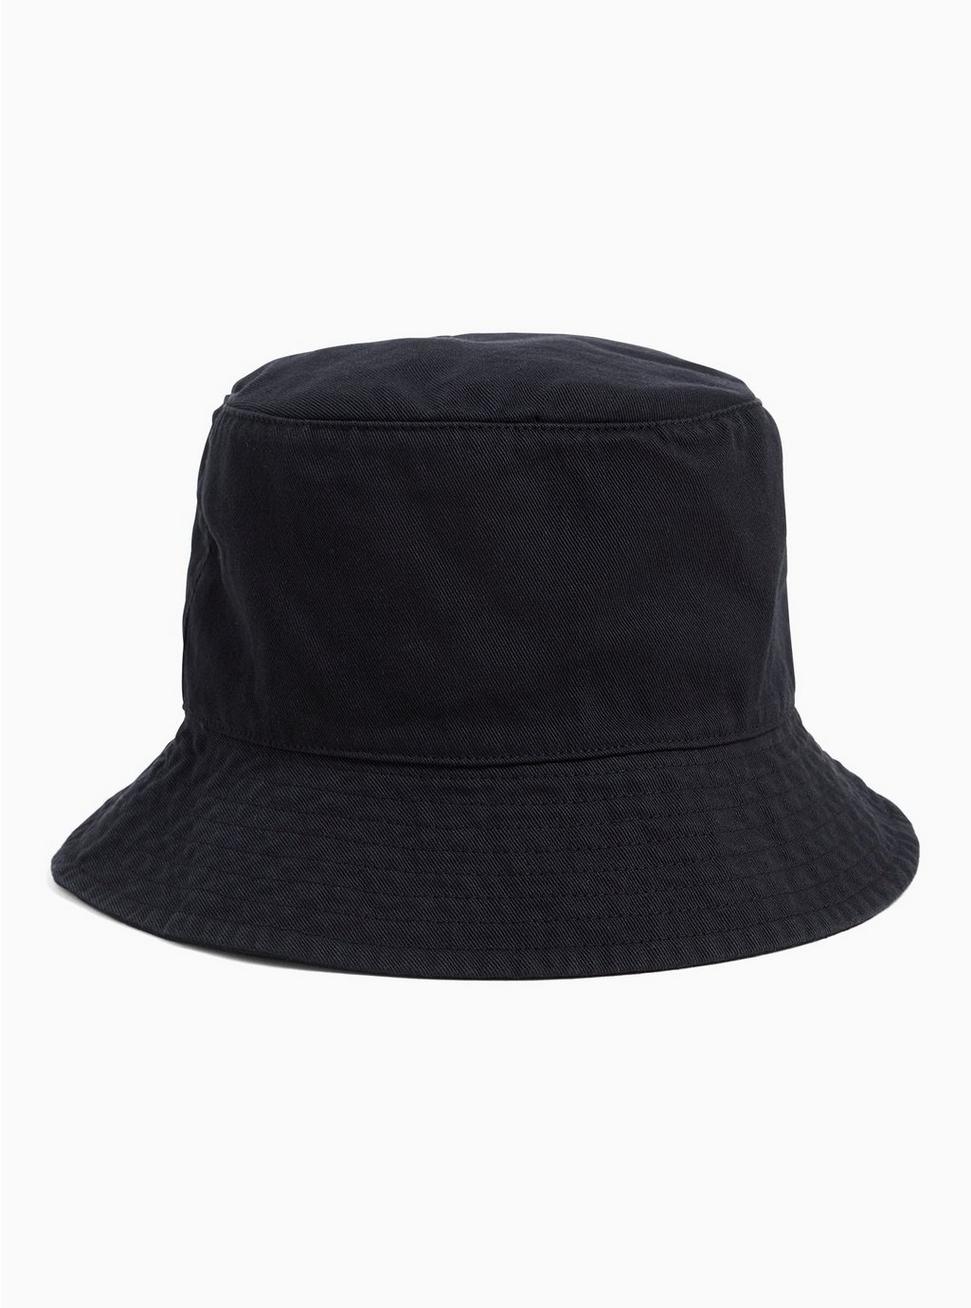 Plus Size - Black Canvas Bucket Hat - Torrid